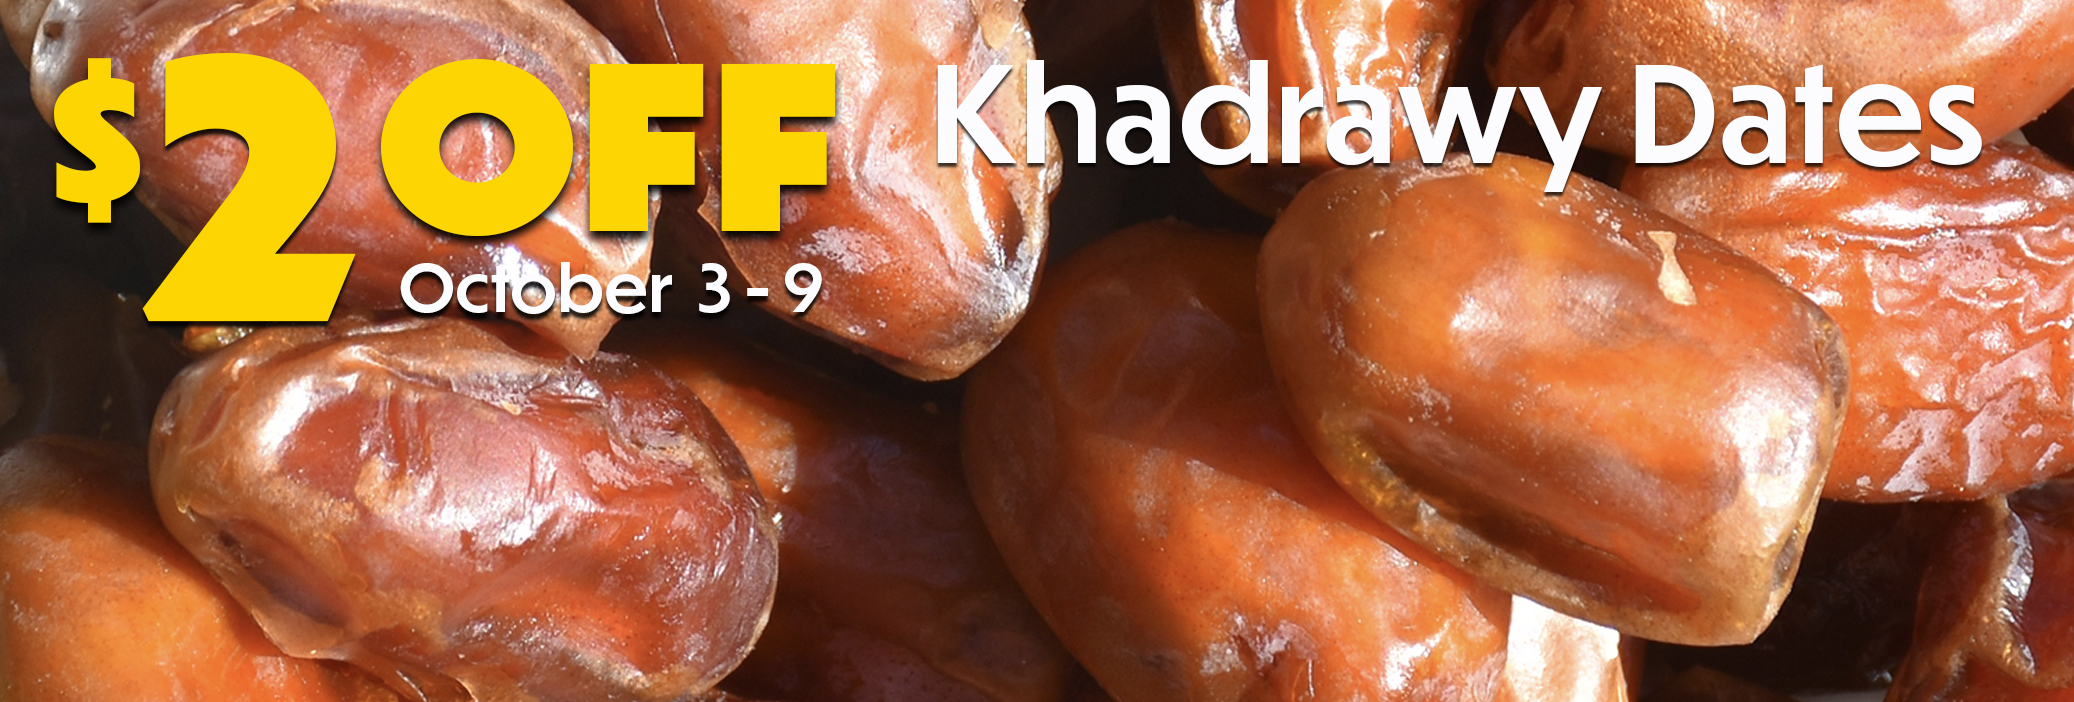 Khadrawy Dates Weekly Sale Banner